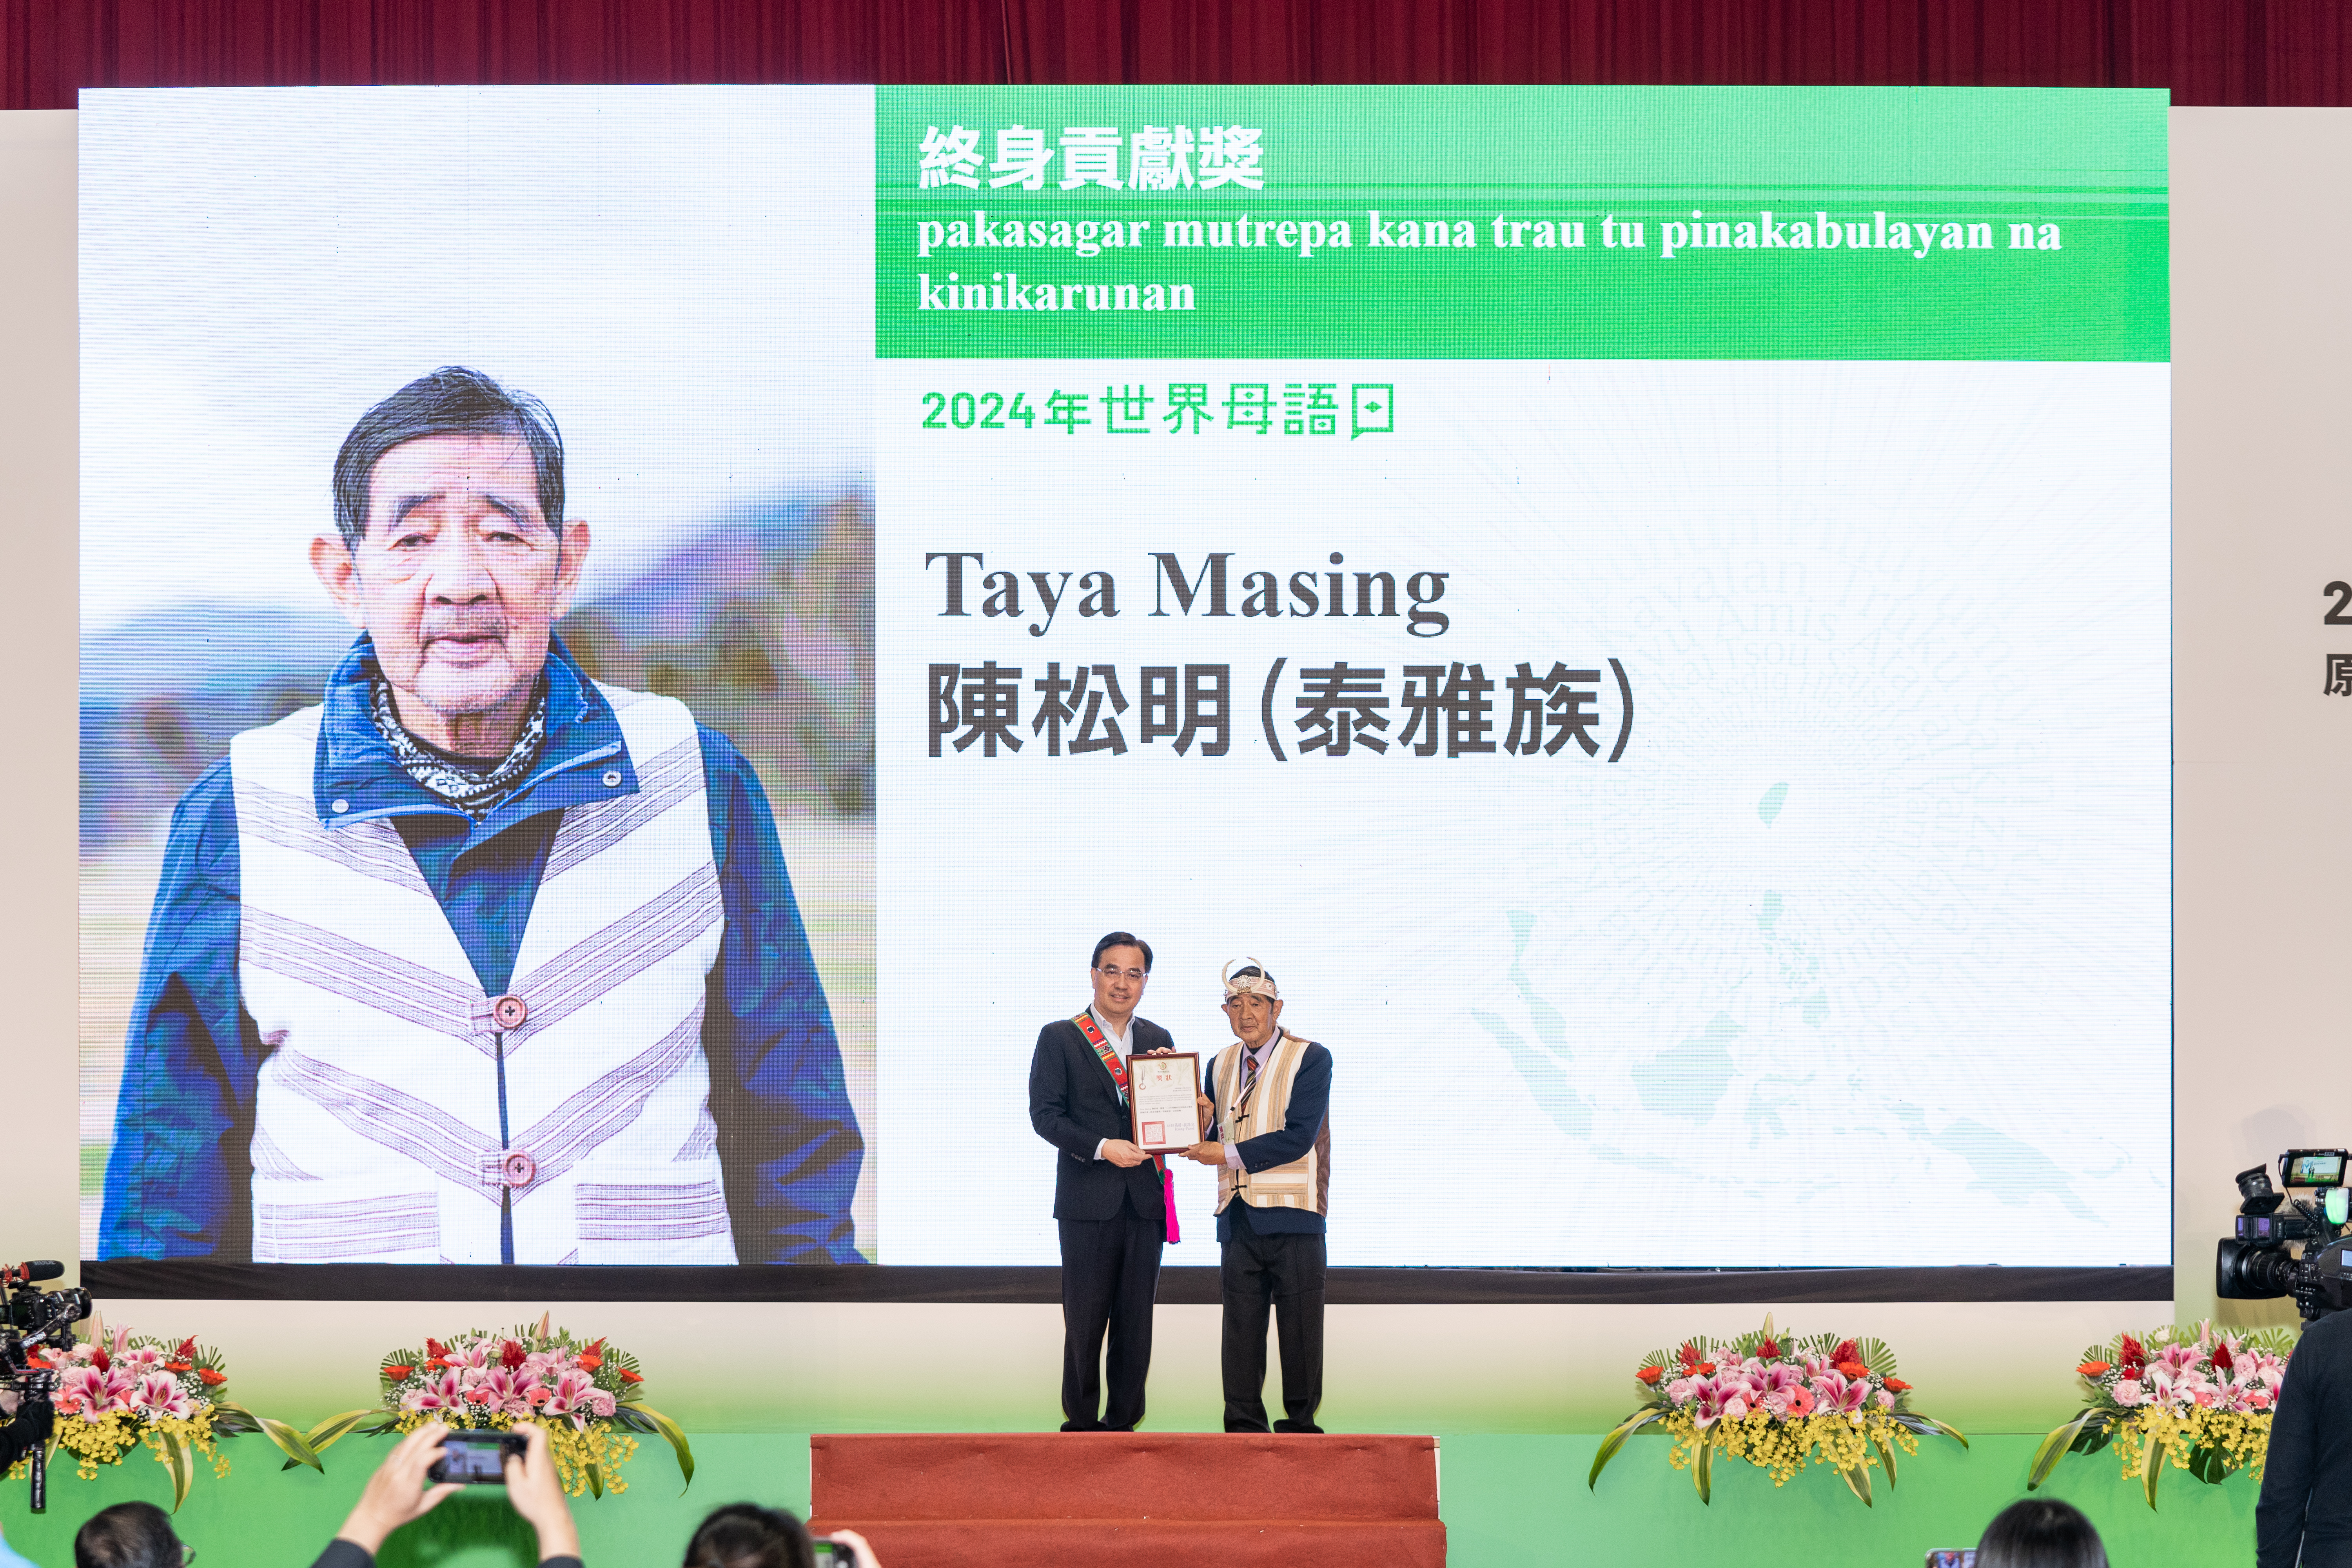 Recipient of the Lifetime Contribution Award – Taya Masing